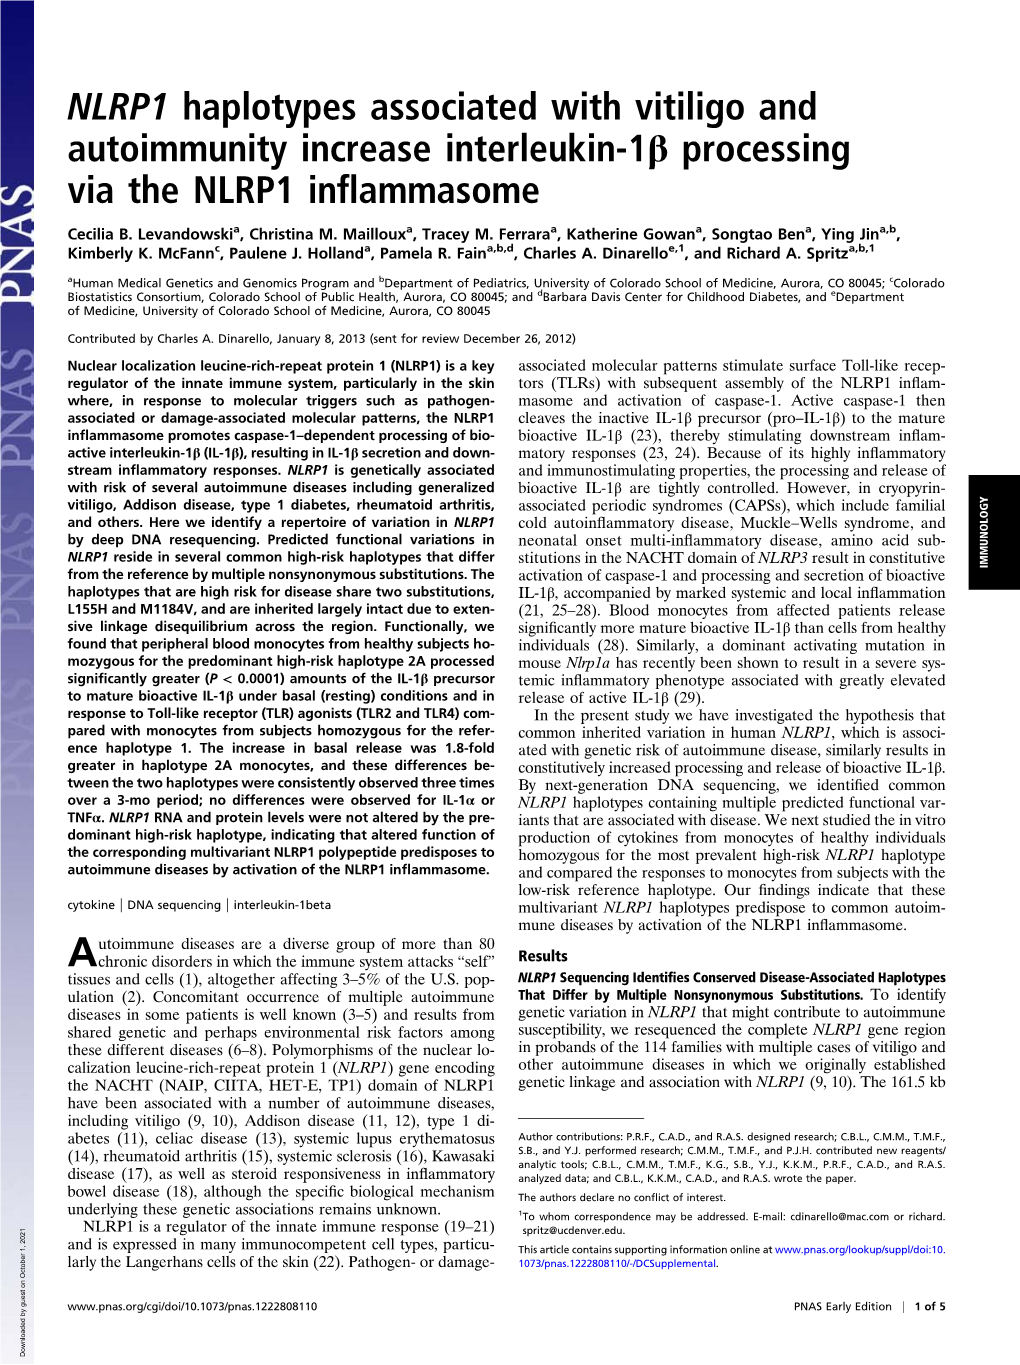 NLRP1 Haplotypes Associated with Vitiligo and Autoimmunity Increase Interleukin-1Β Processing Via the NLRP1 Inflammasome